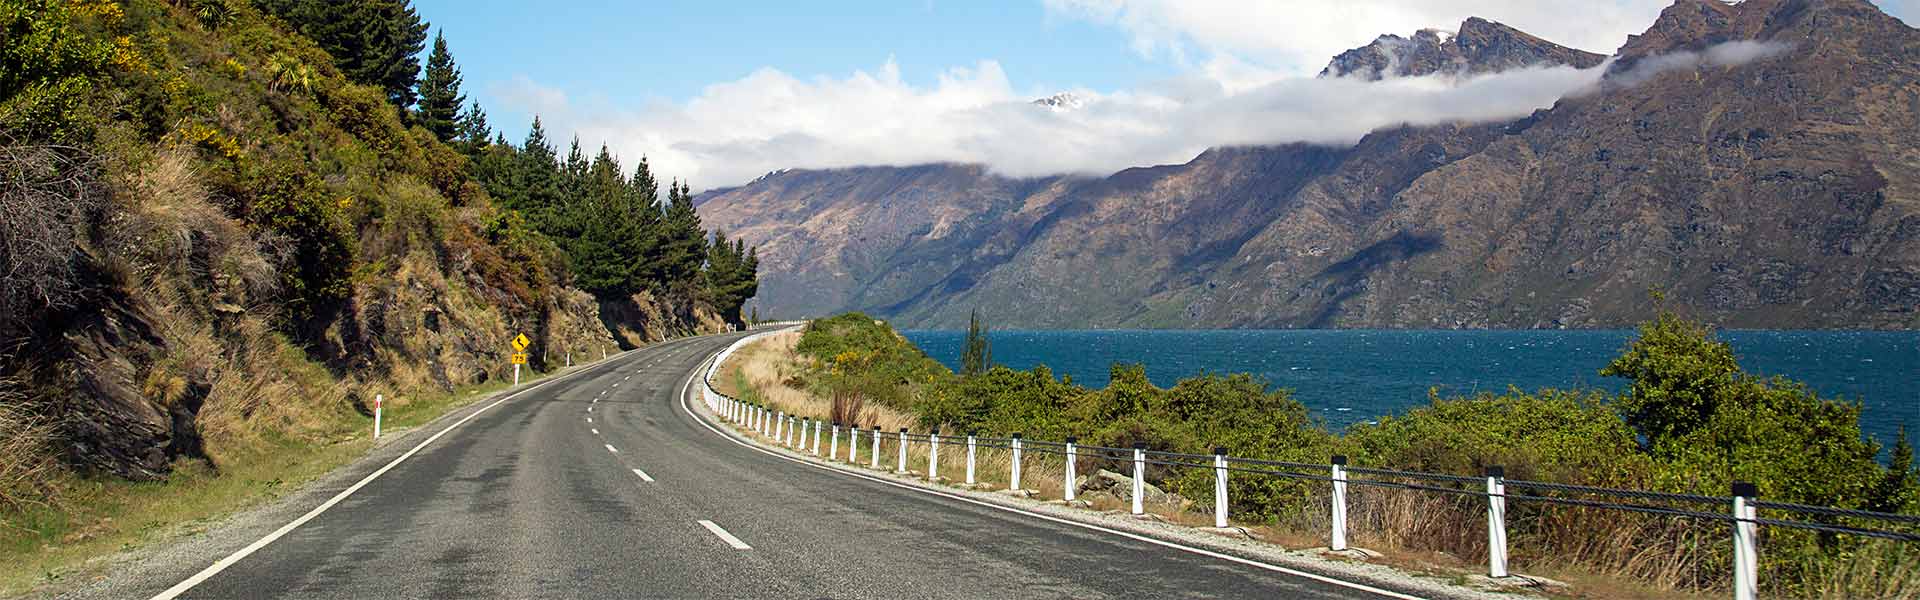 Scenic Road in New Zealand